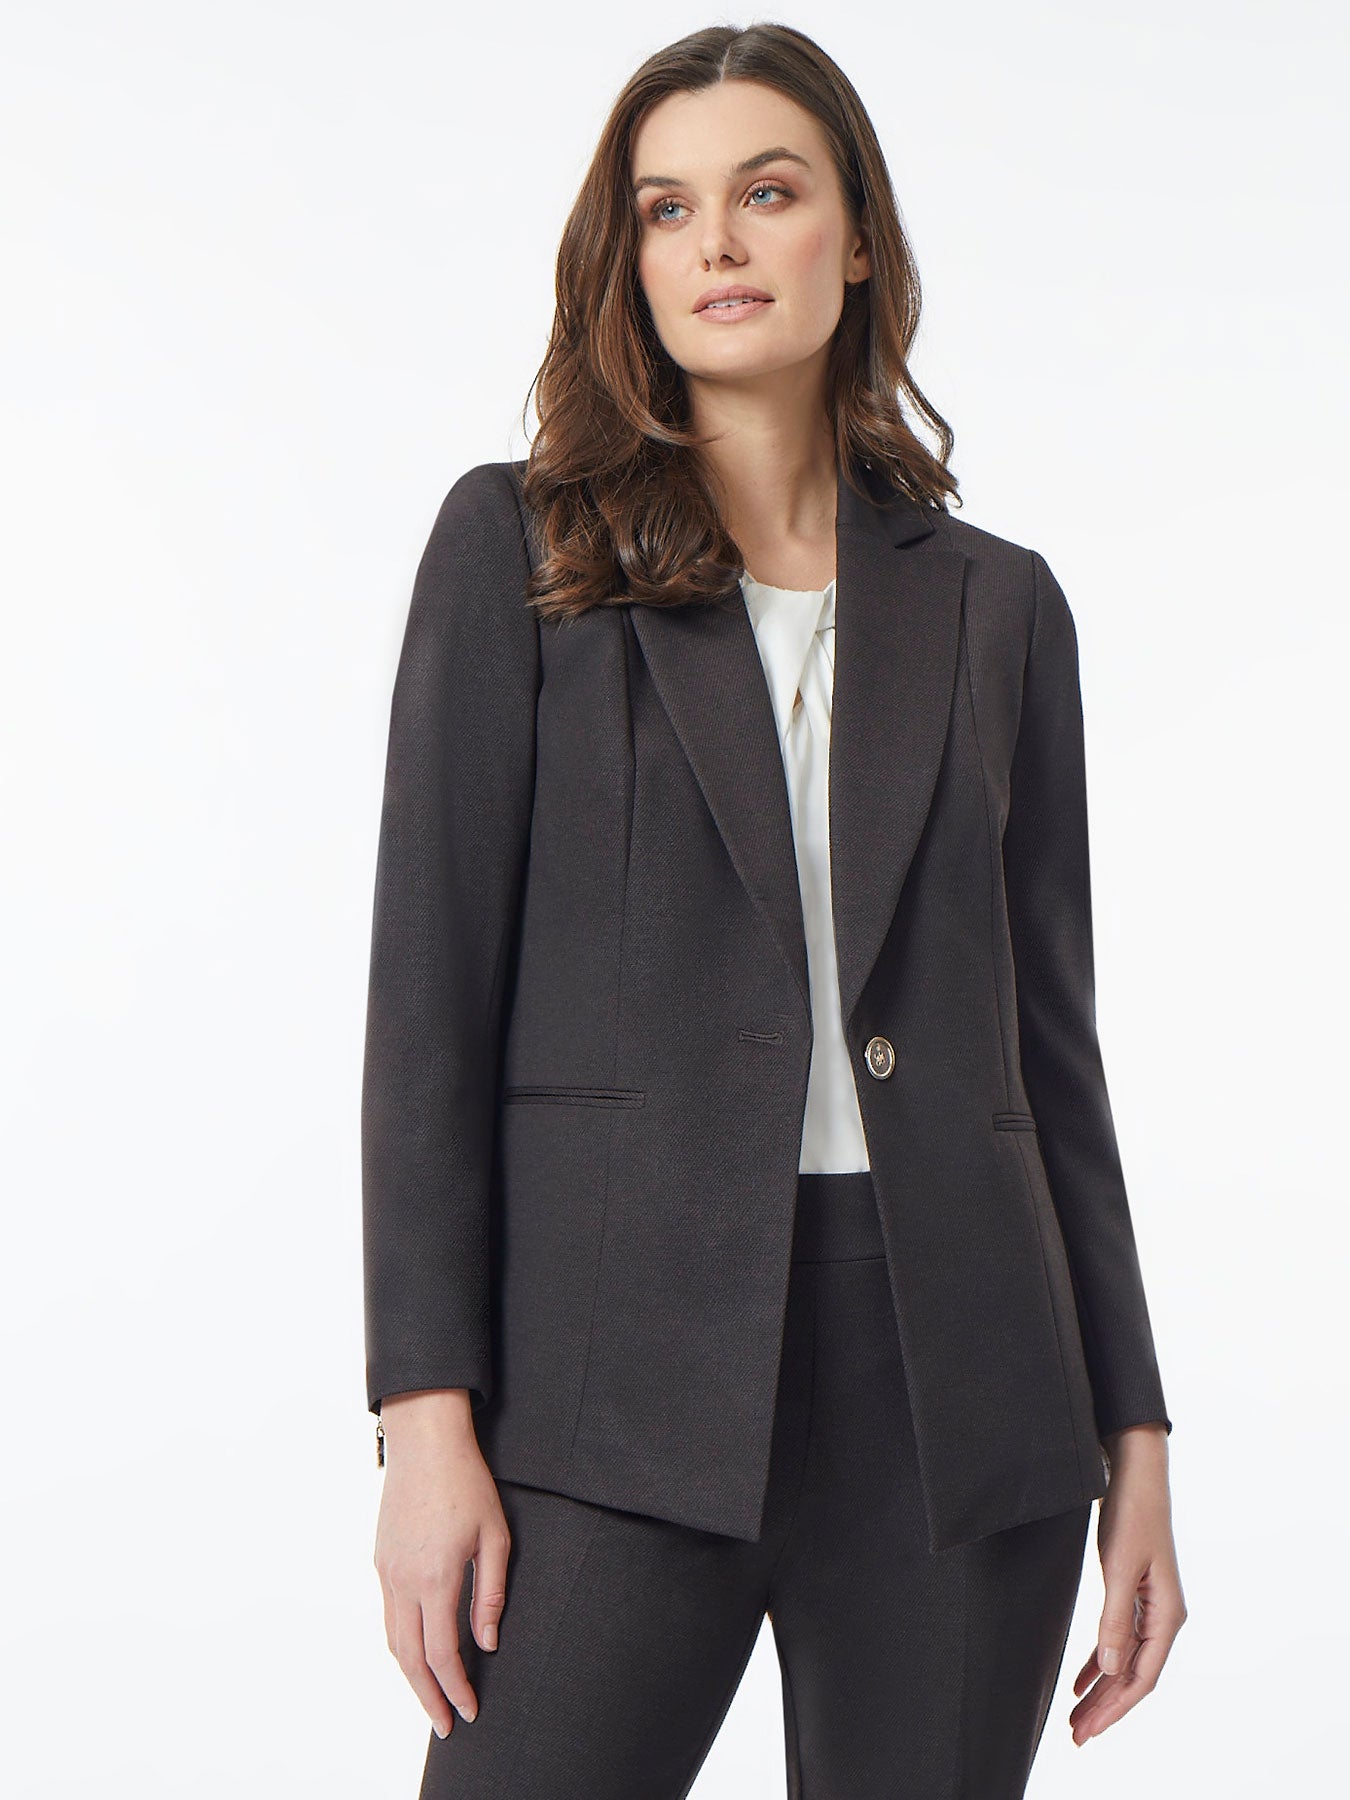 KASPER Womens Black Embellished Blazer Jacket Plus Size: 1X 